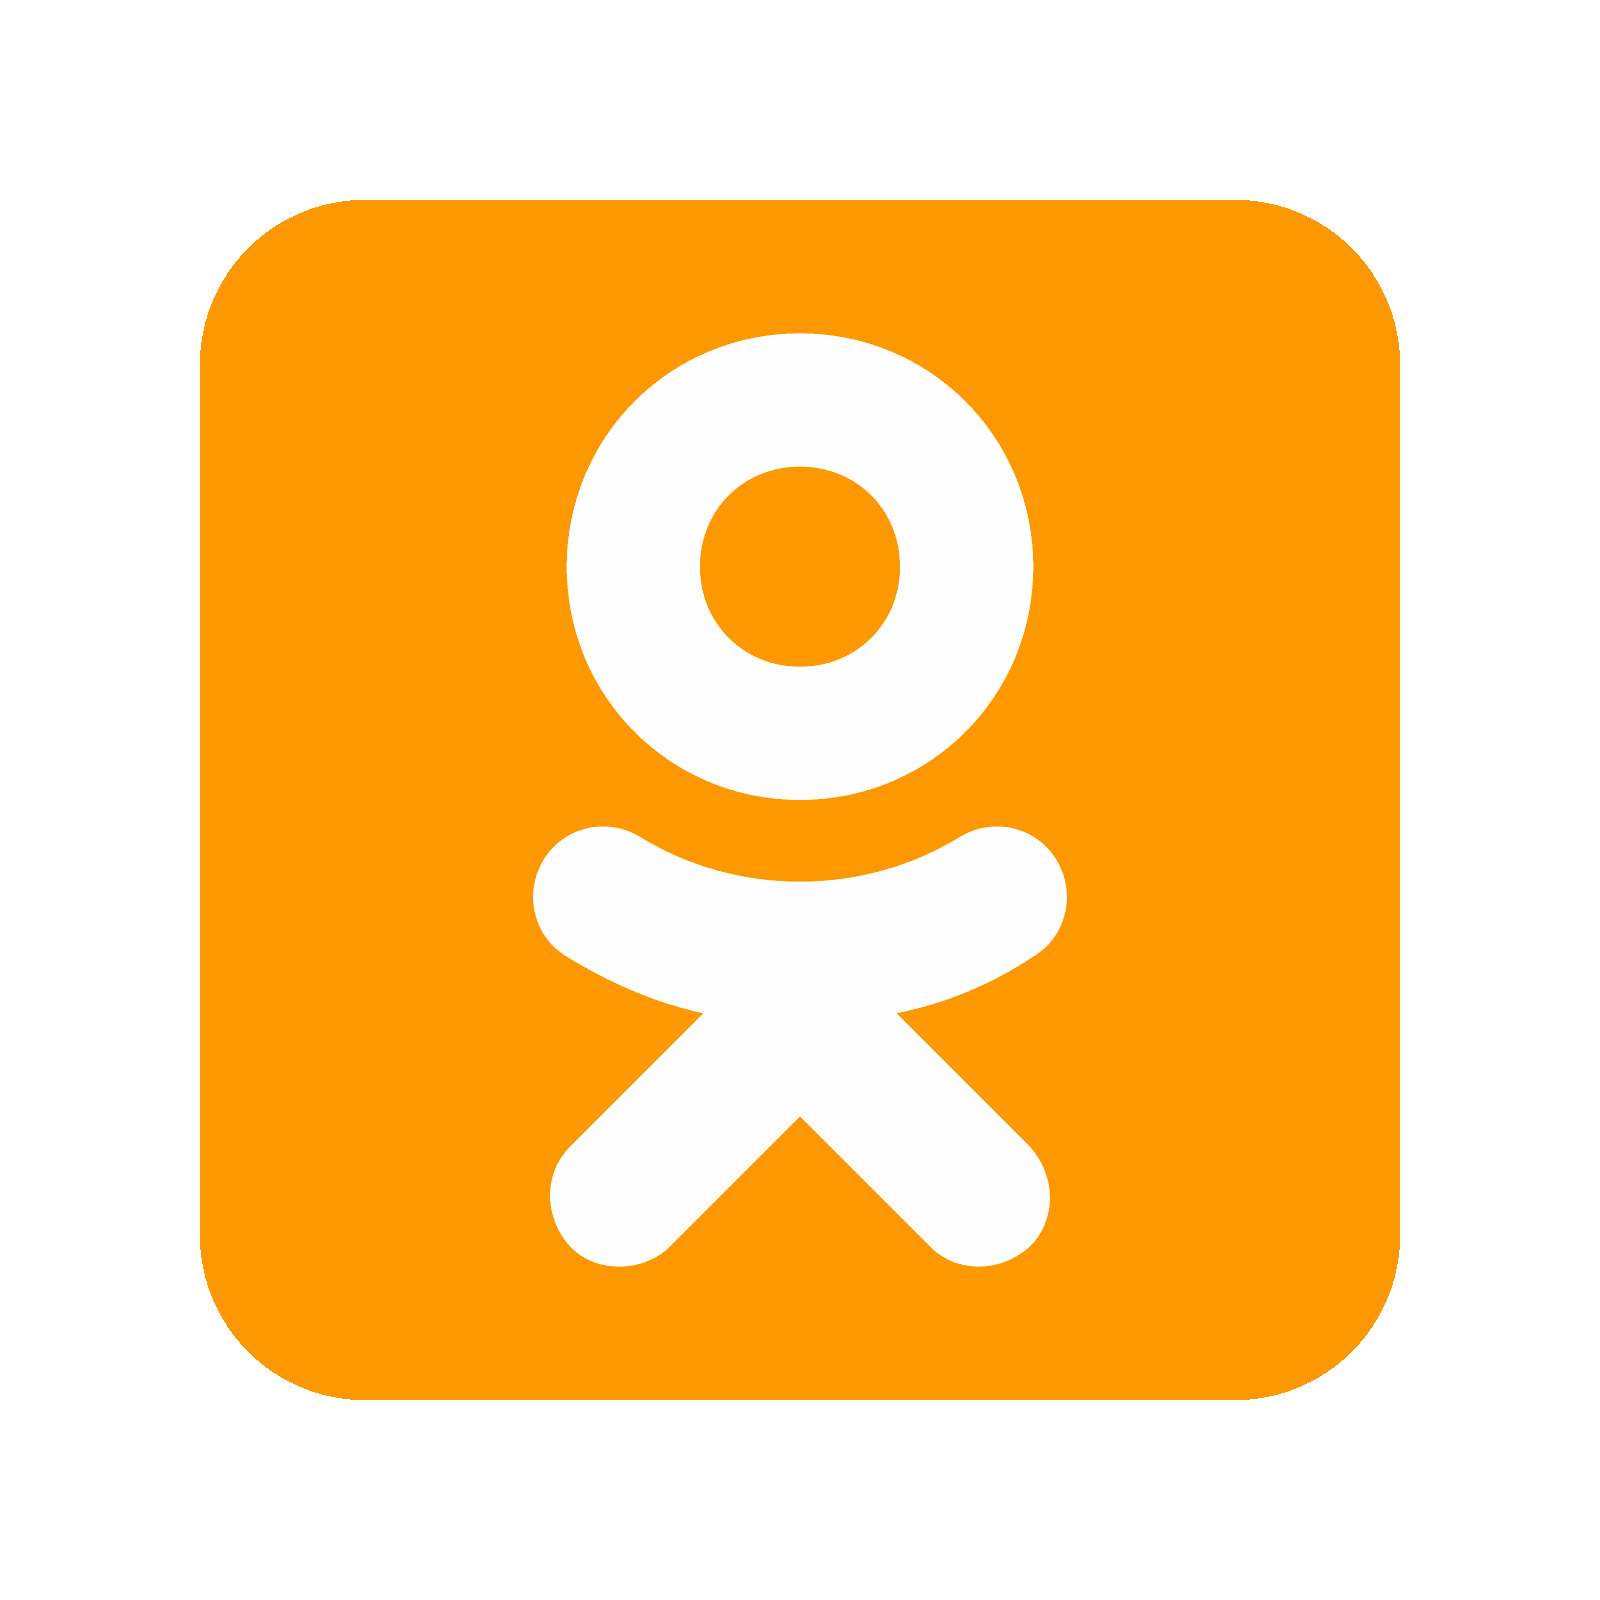 Odnoklassniki logo PNG image free Download 